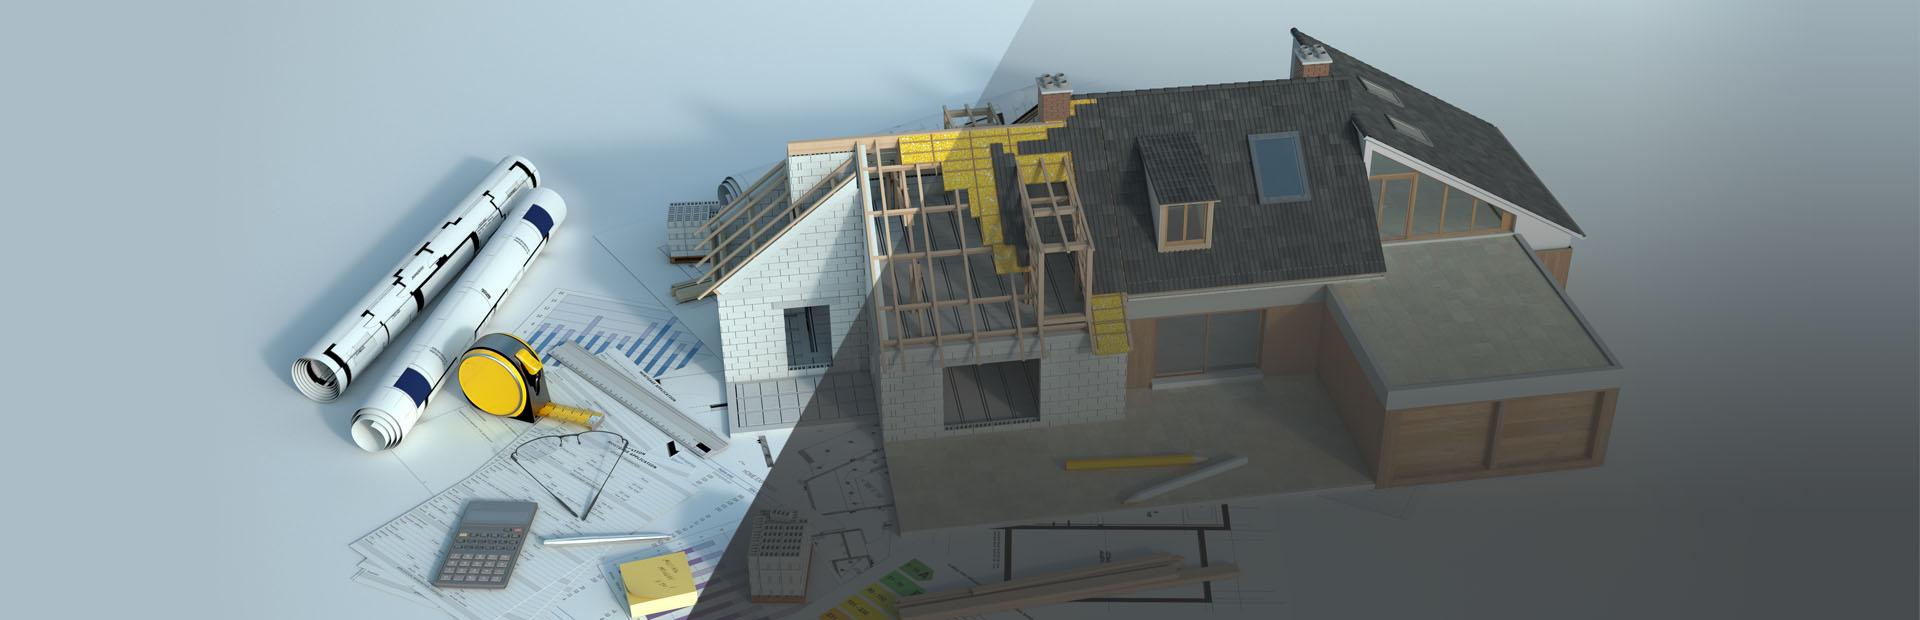 Slajd 1 - Model domu i narzędzia budowlane